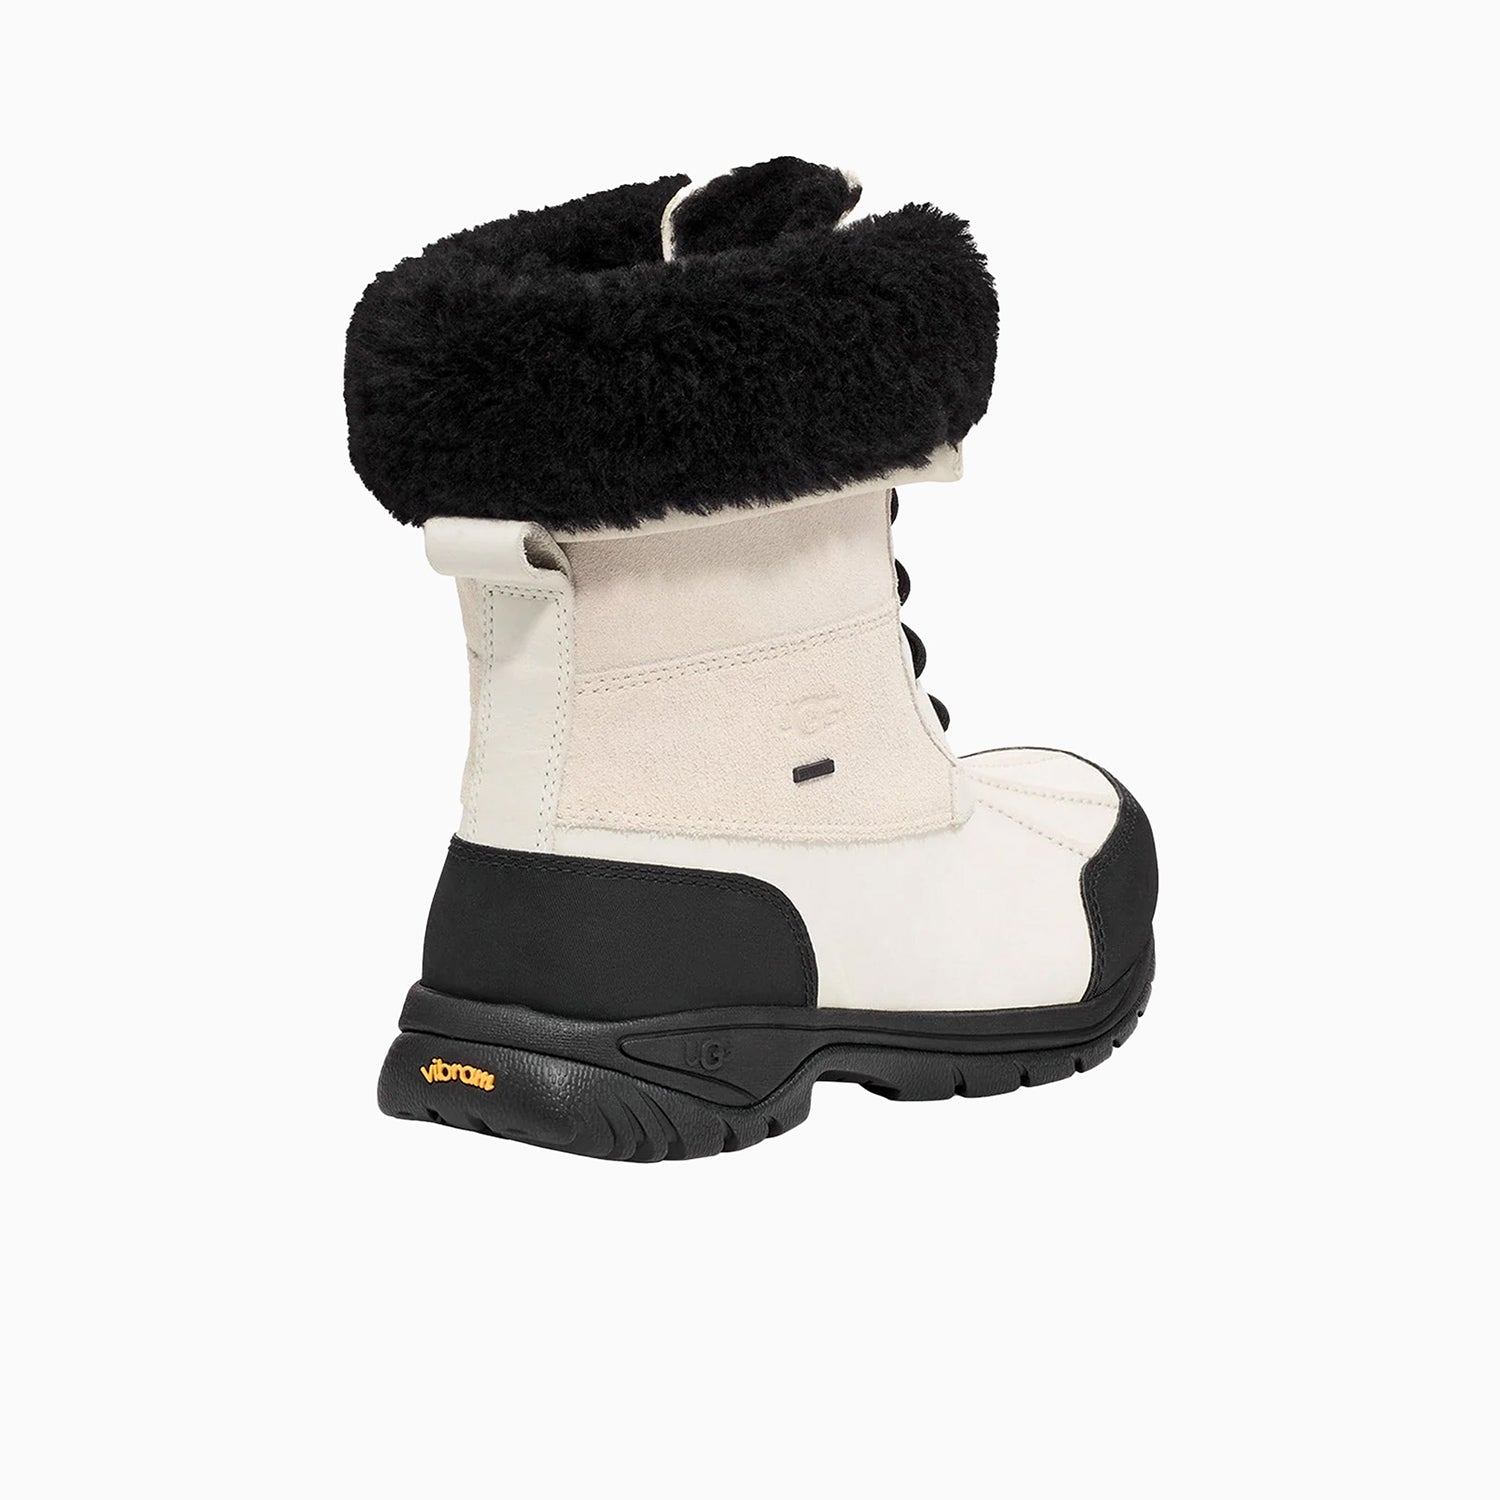 Men's Butte Waterproof Leather Snow Boot